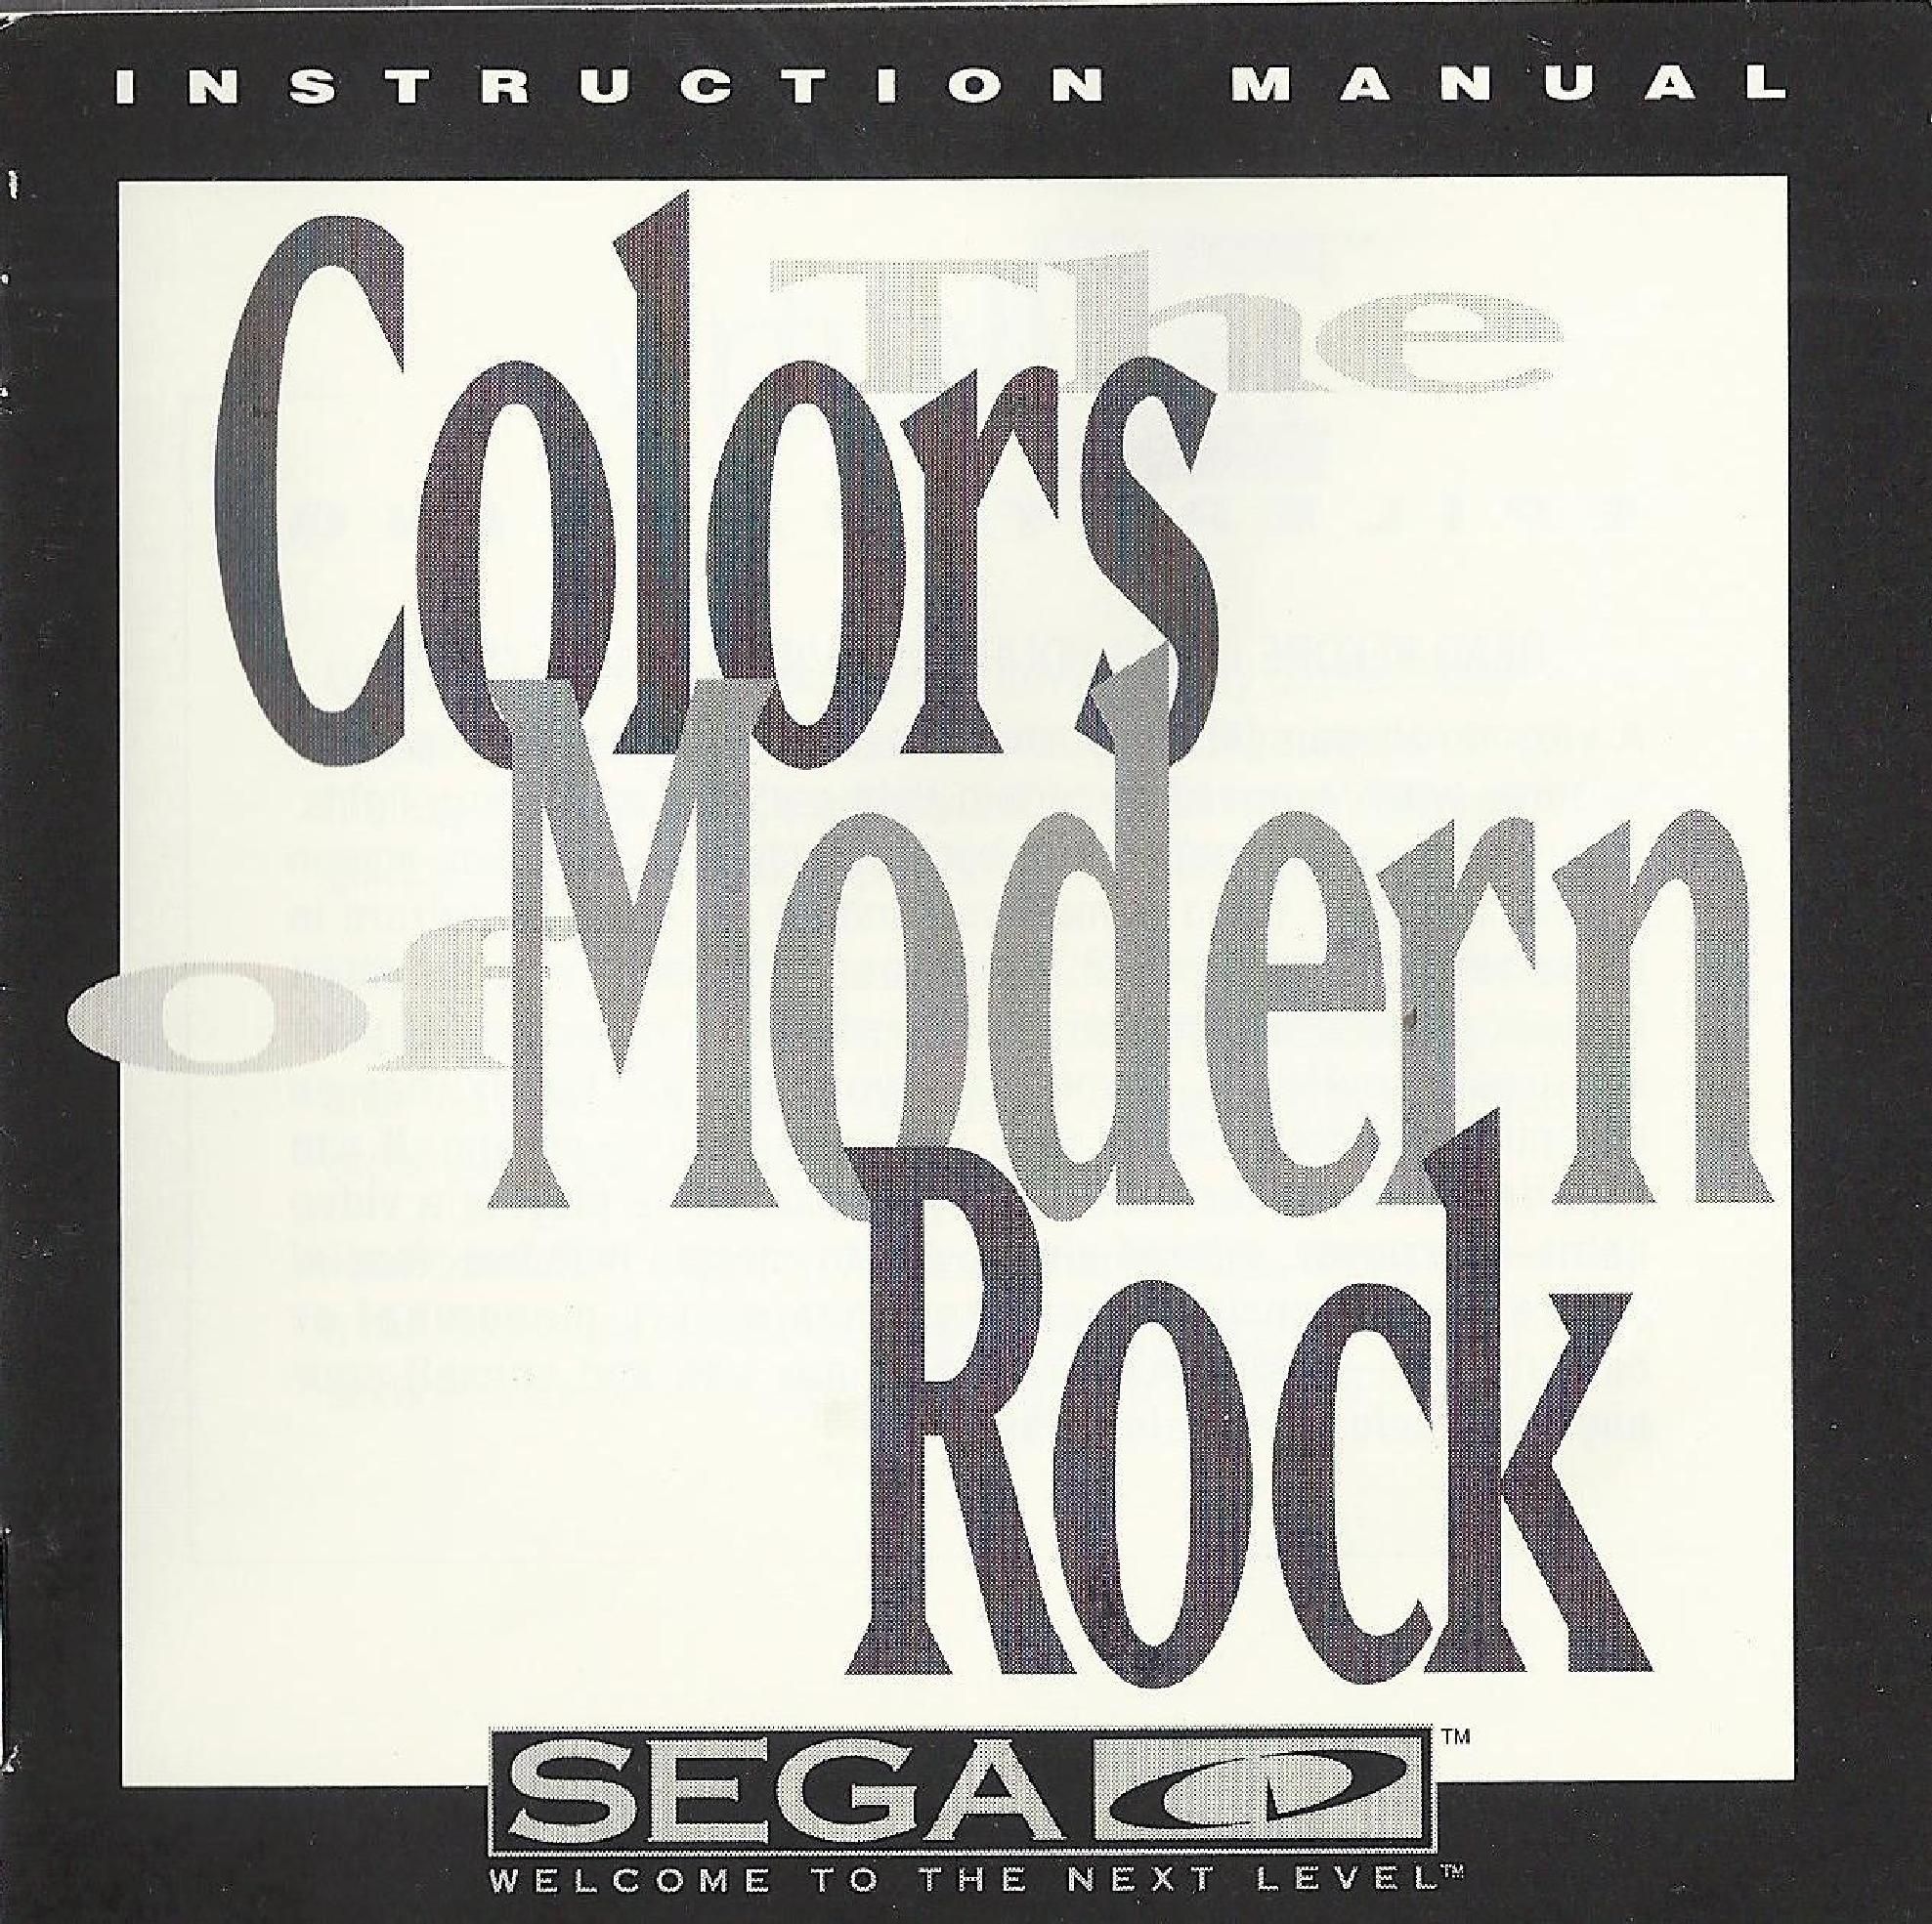 Colorsofmodernrock mcd us manual.pdf